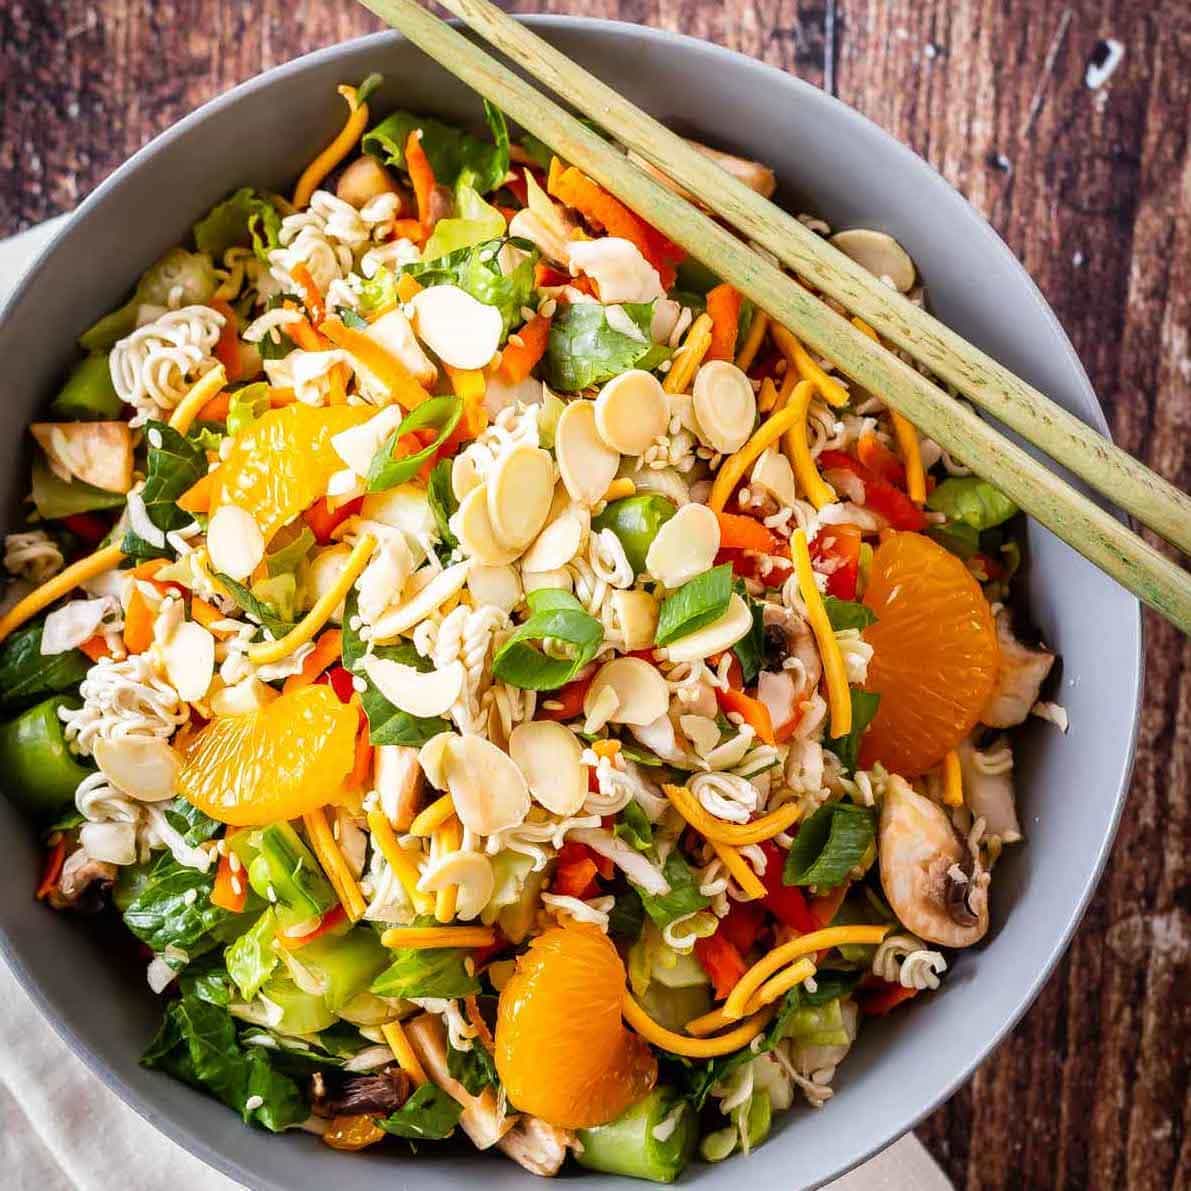 https://bake-eat-repeat.com/wp-content/uploads/2014/12/Asian-Chopped-Salad-6-copy.jpg